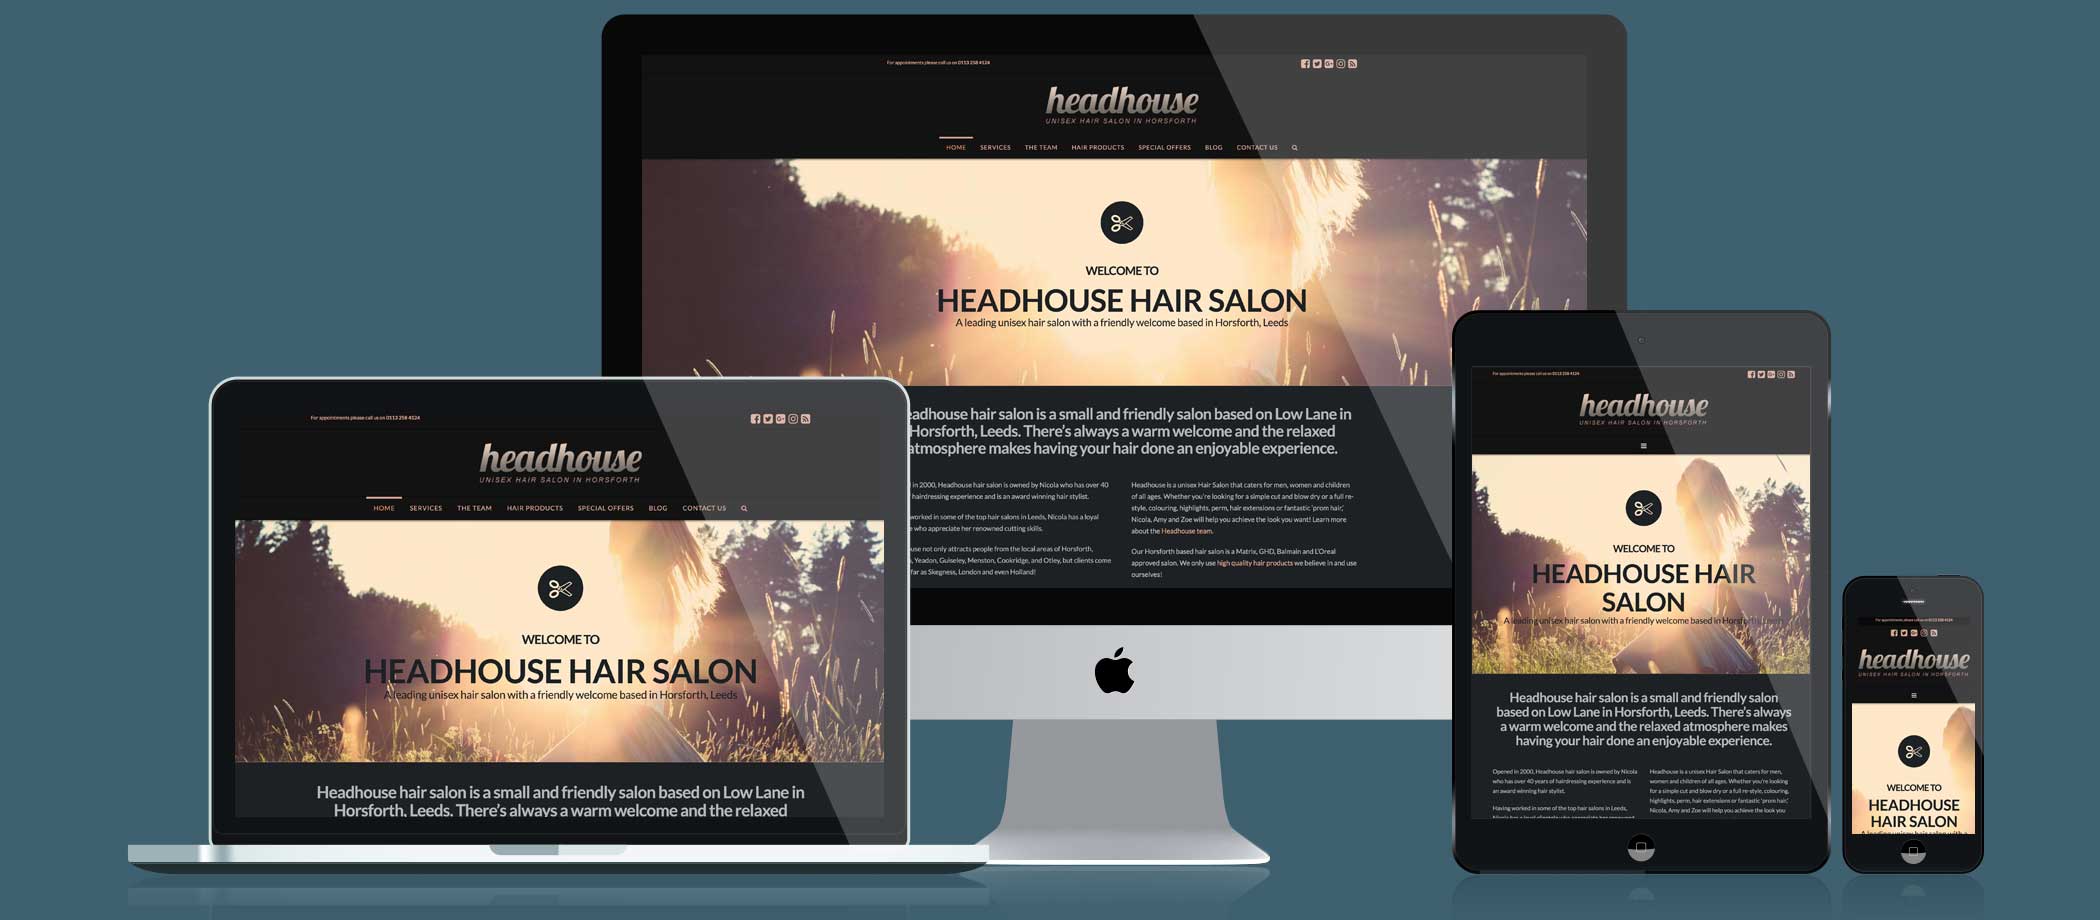 Headhouse Hair Salon website responsive displays